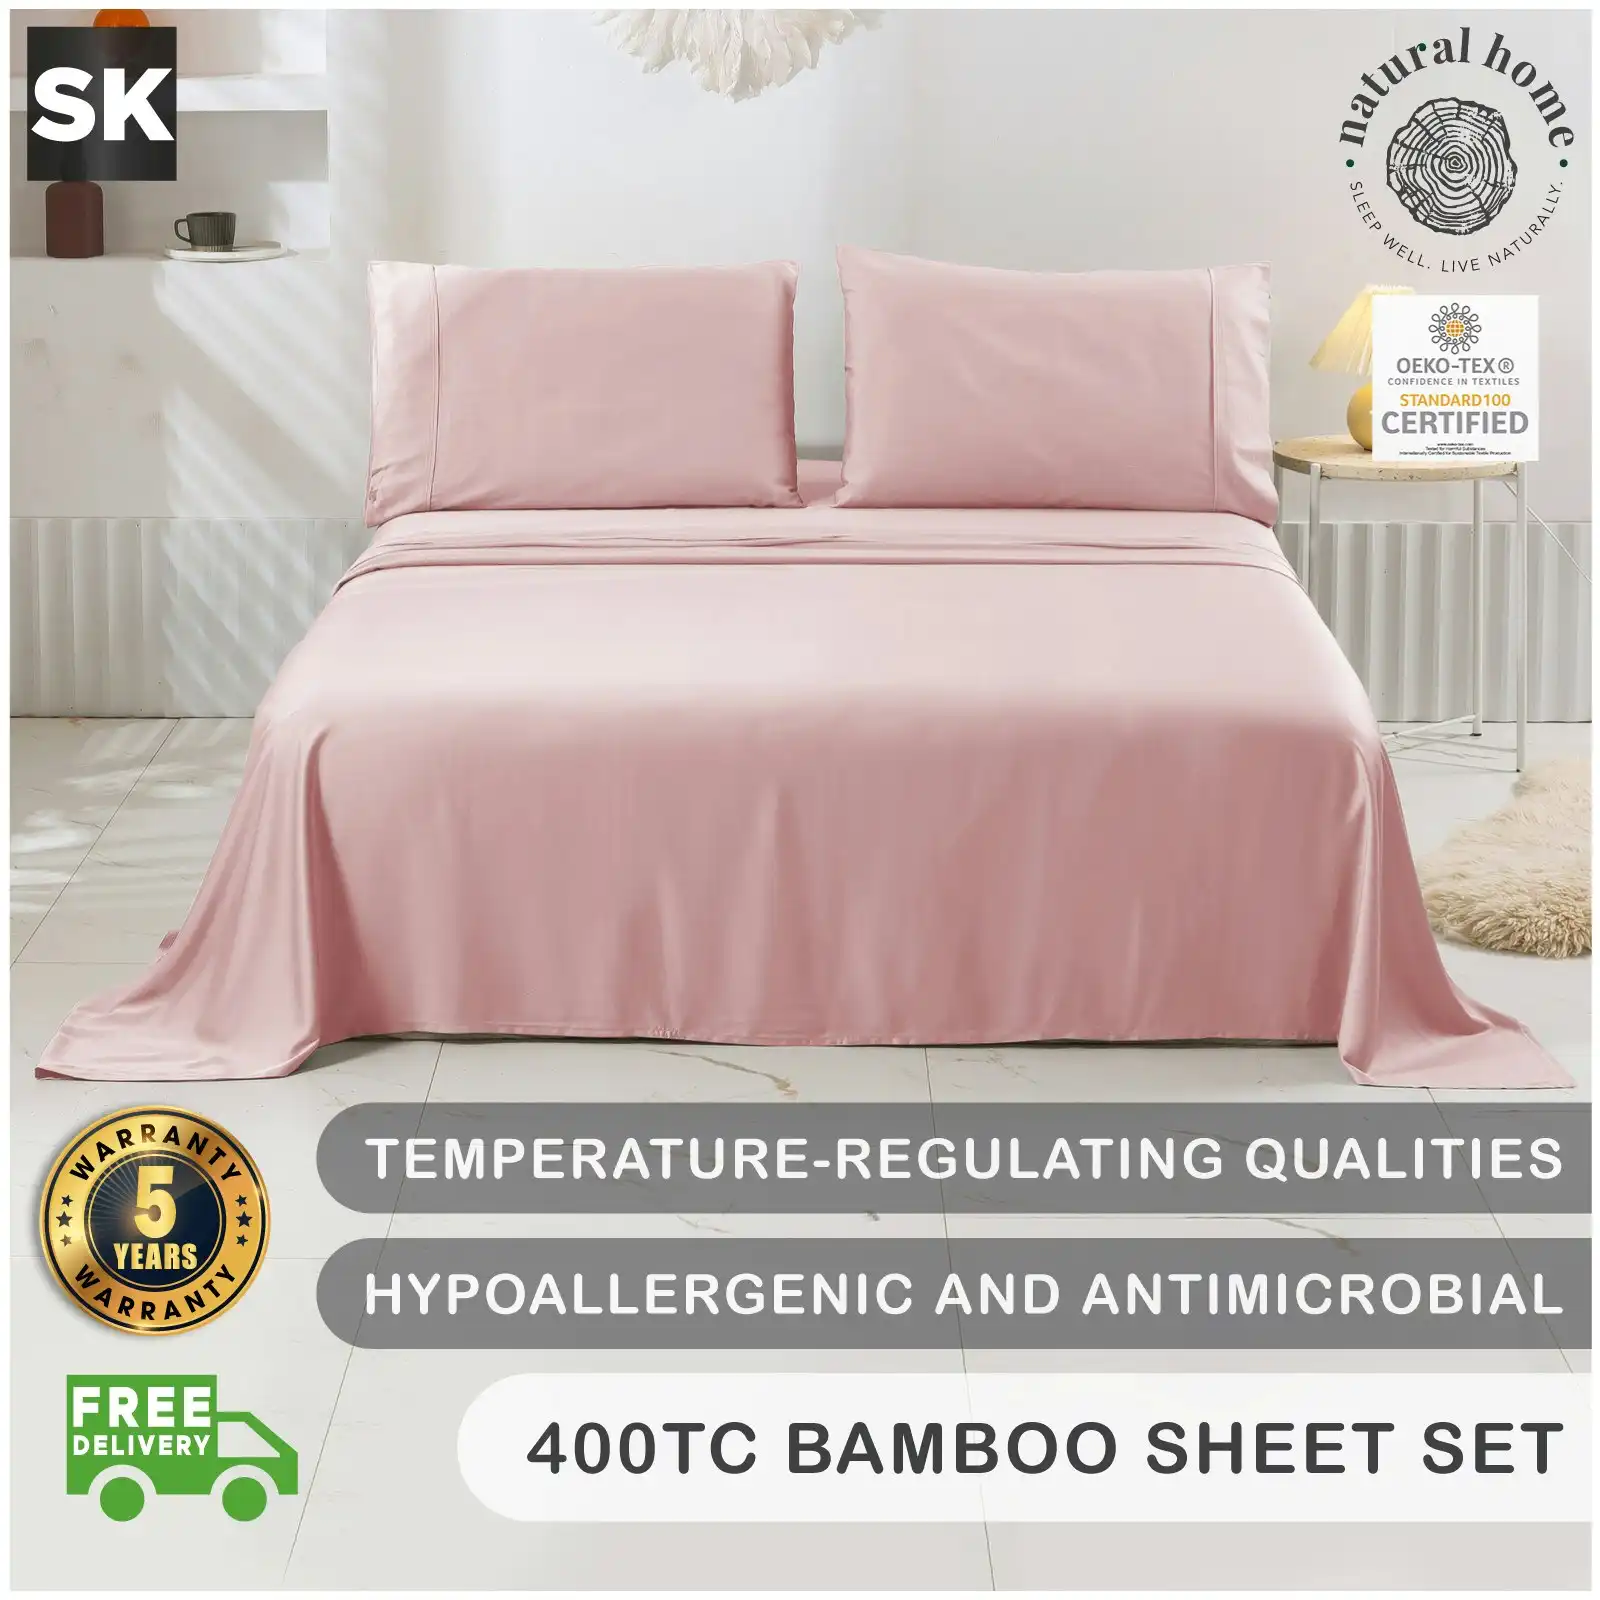 Natural Home Bamboo Sheet Set Blush Pink Super King Bed